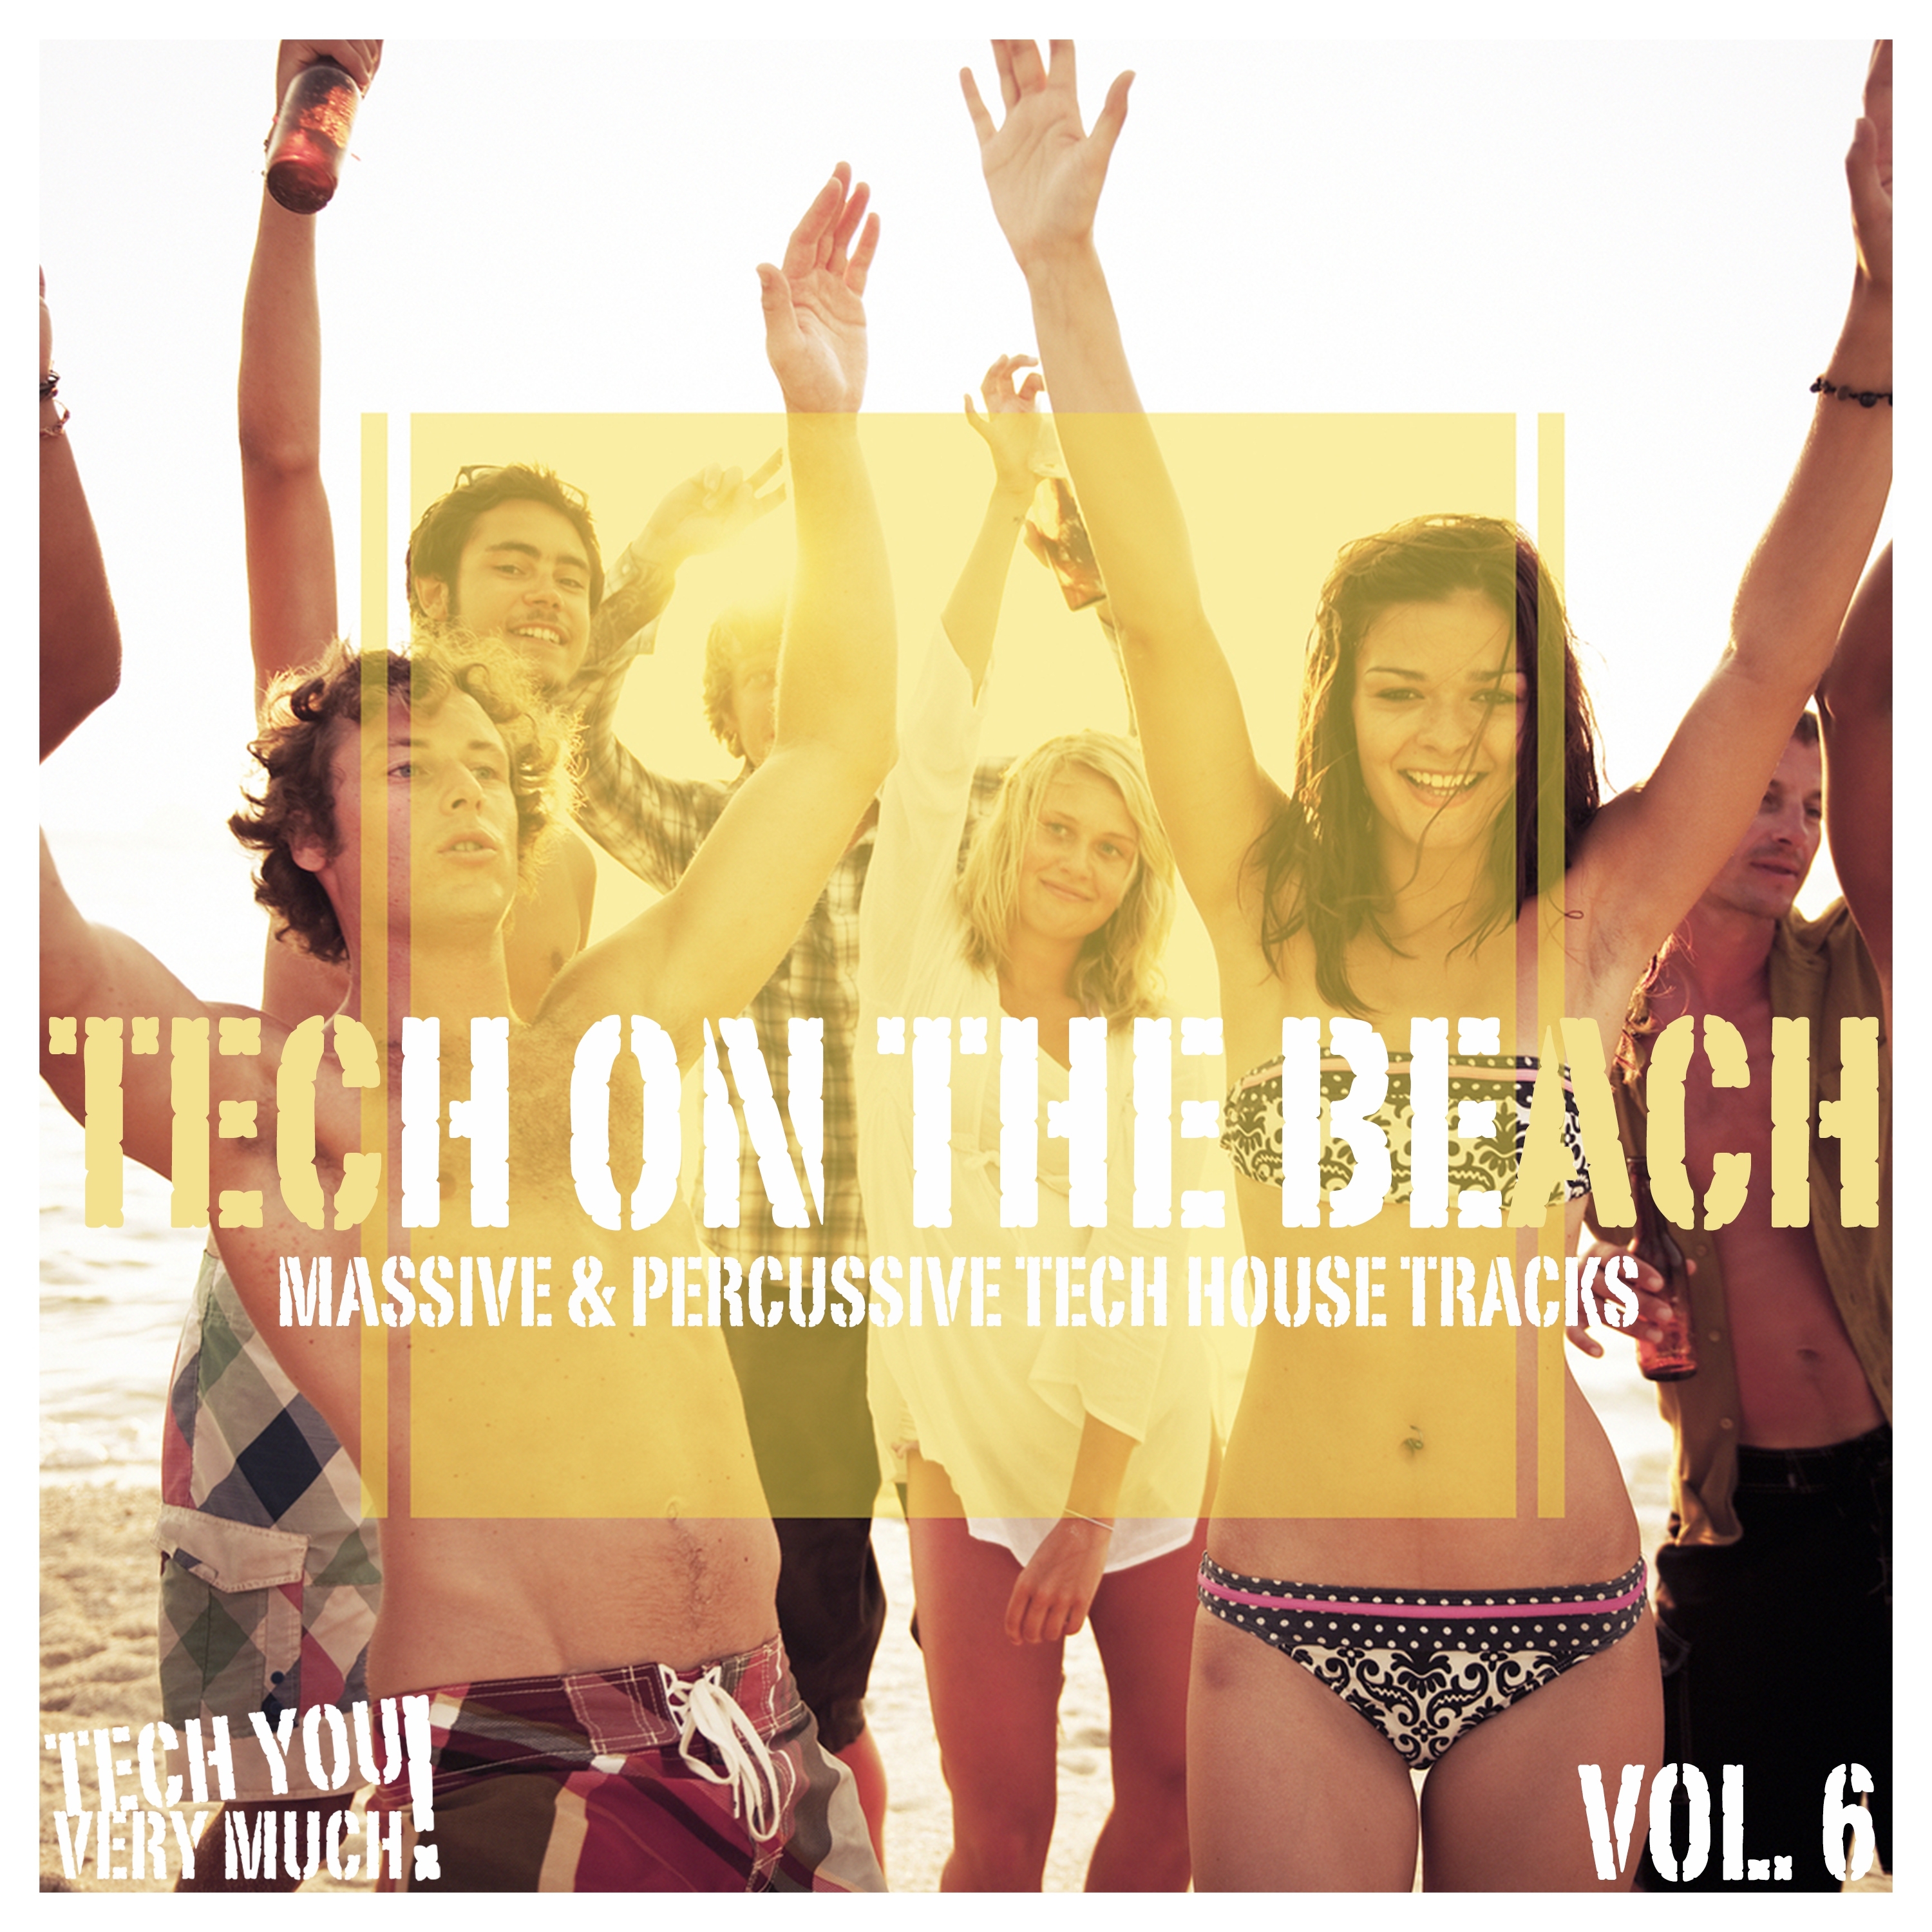 Tech On the Beach, Vol. 6 (Massive & Percussive Tech House Tracks)